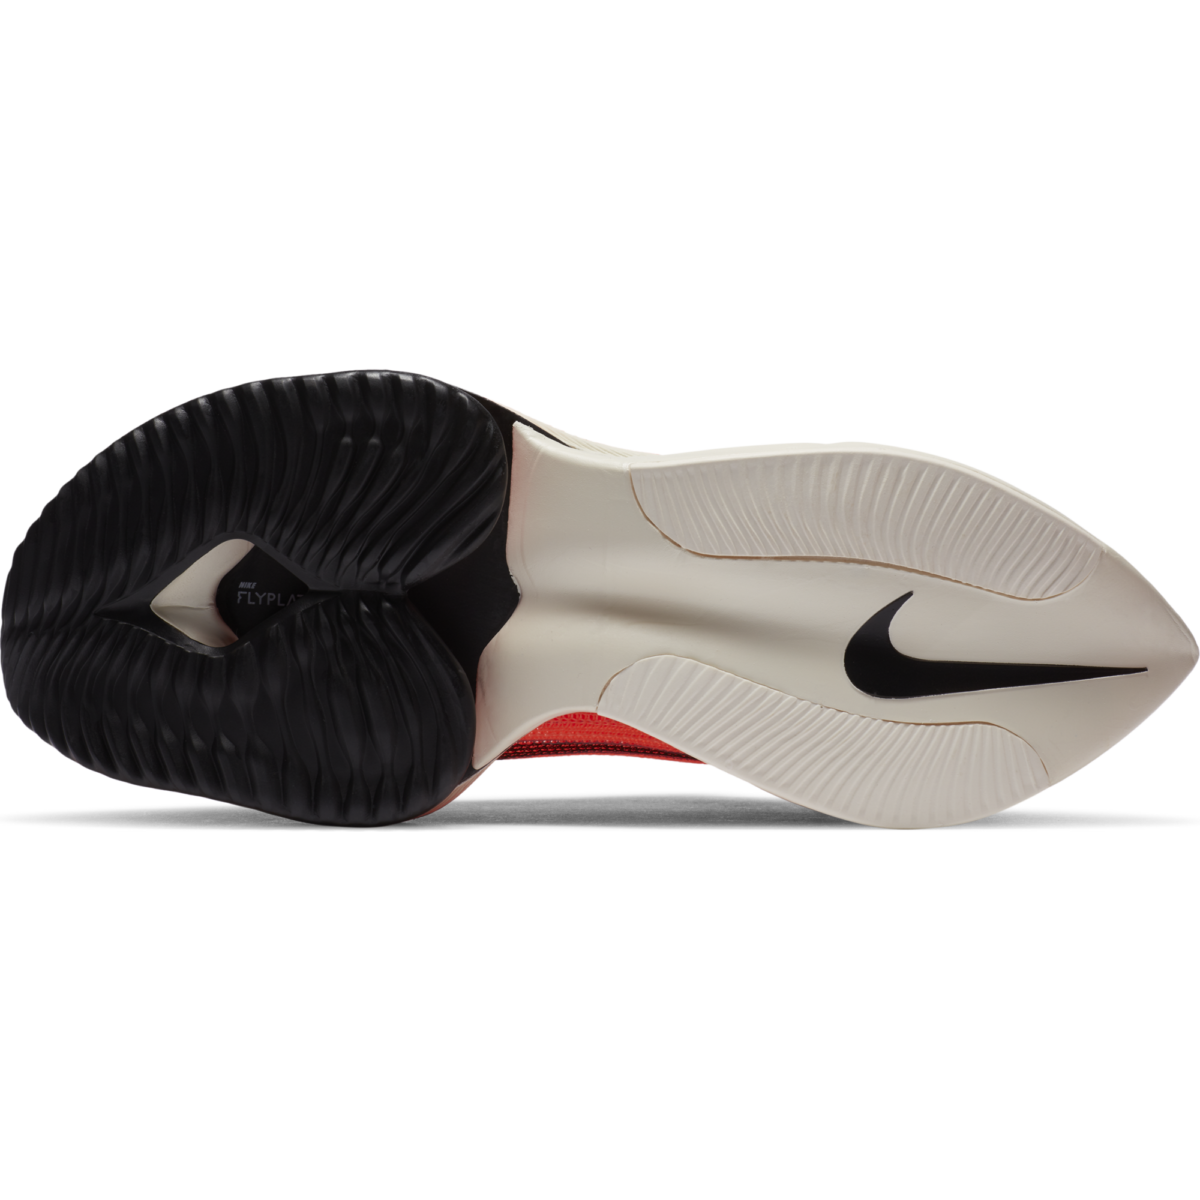 Men's Nike Alphafly Next% CI9925-800